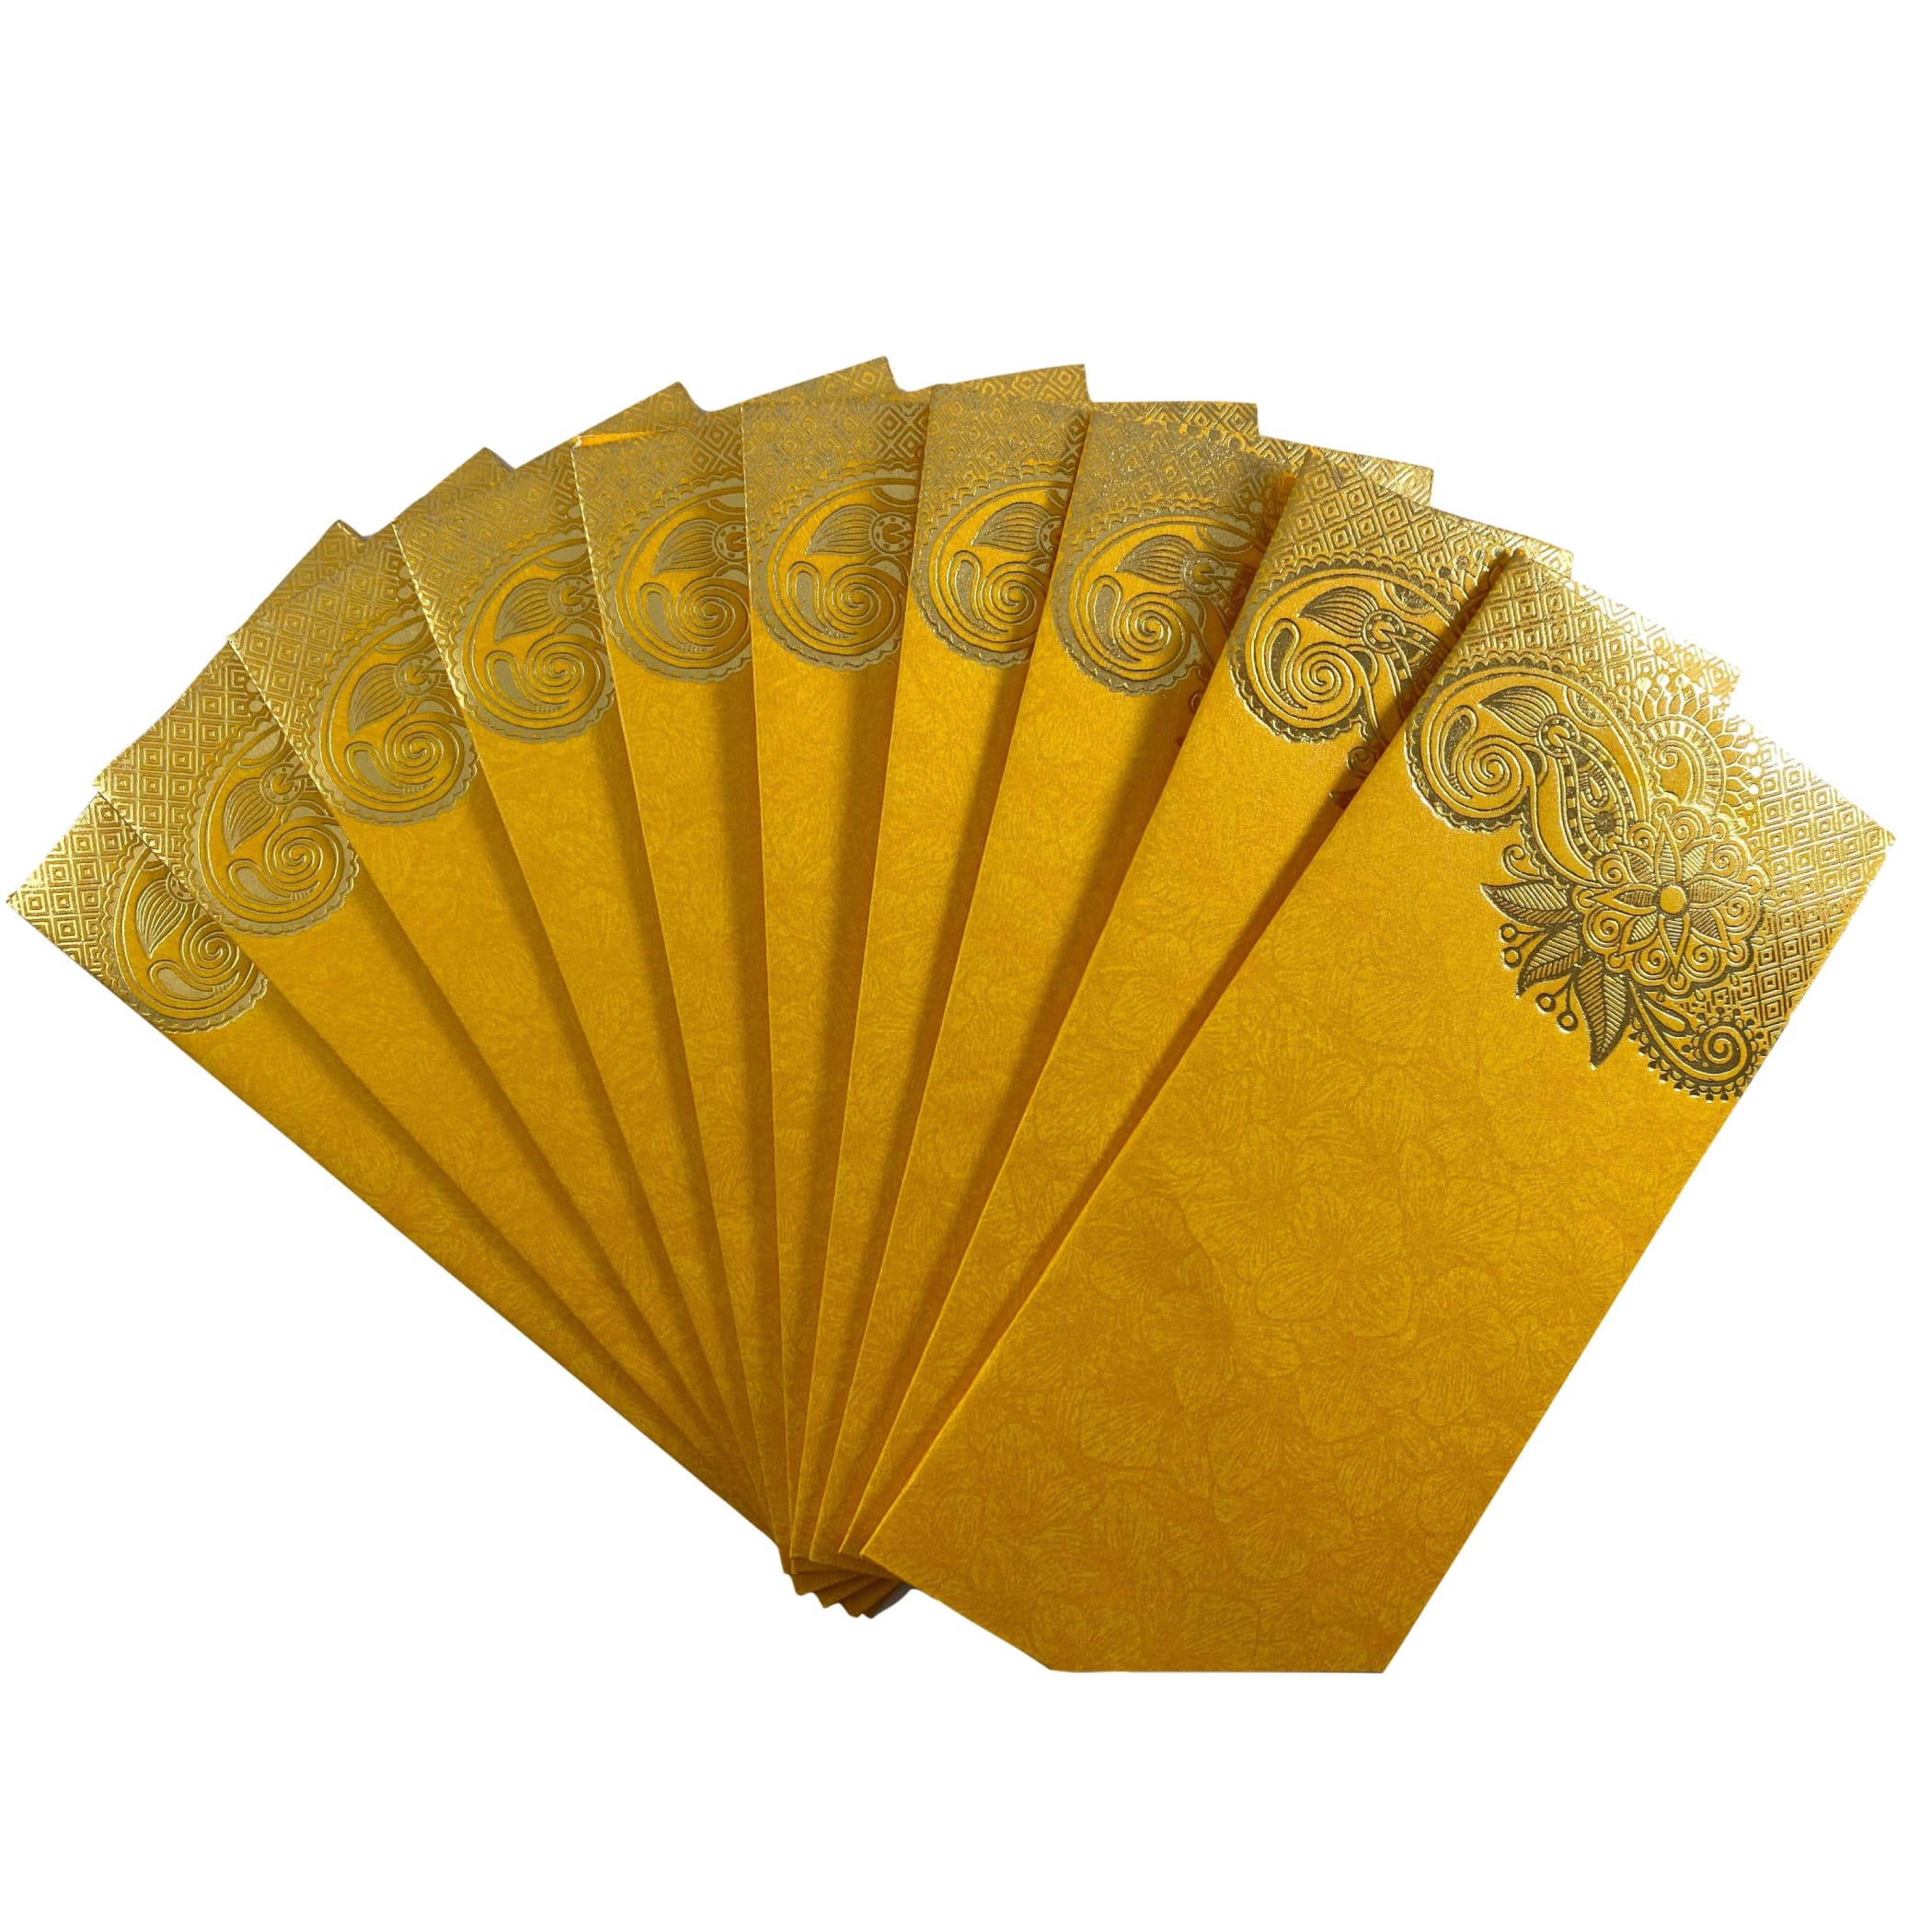 Pack of 10 assorted shagun envelope money gift lucky cash